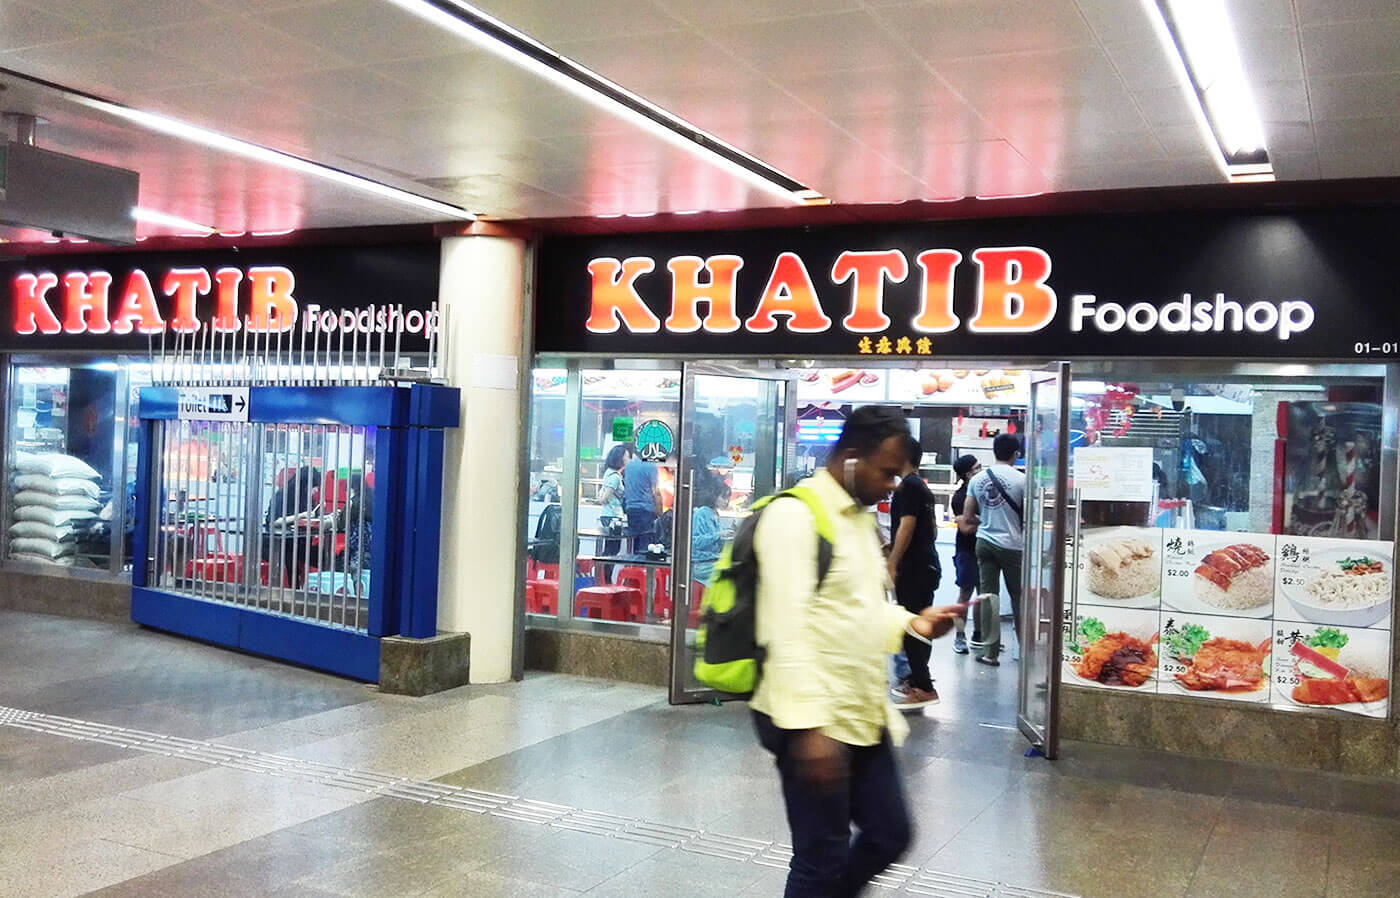 卡迪地铁站美食店Khatib Foodshop